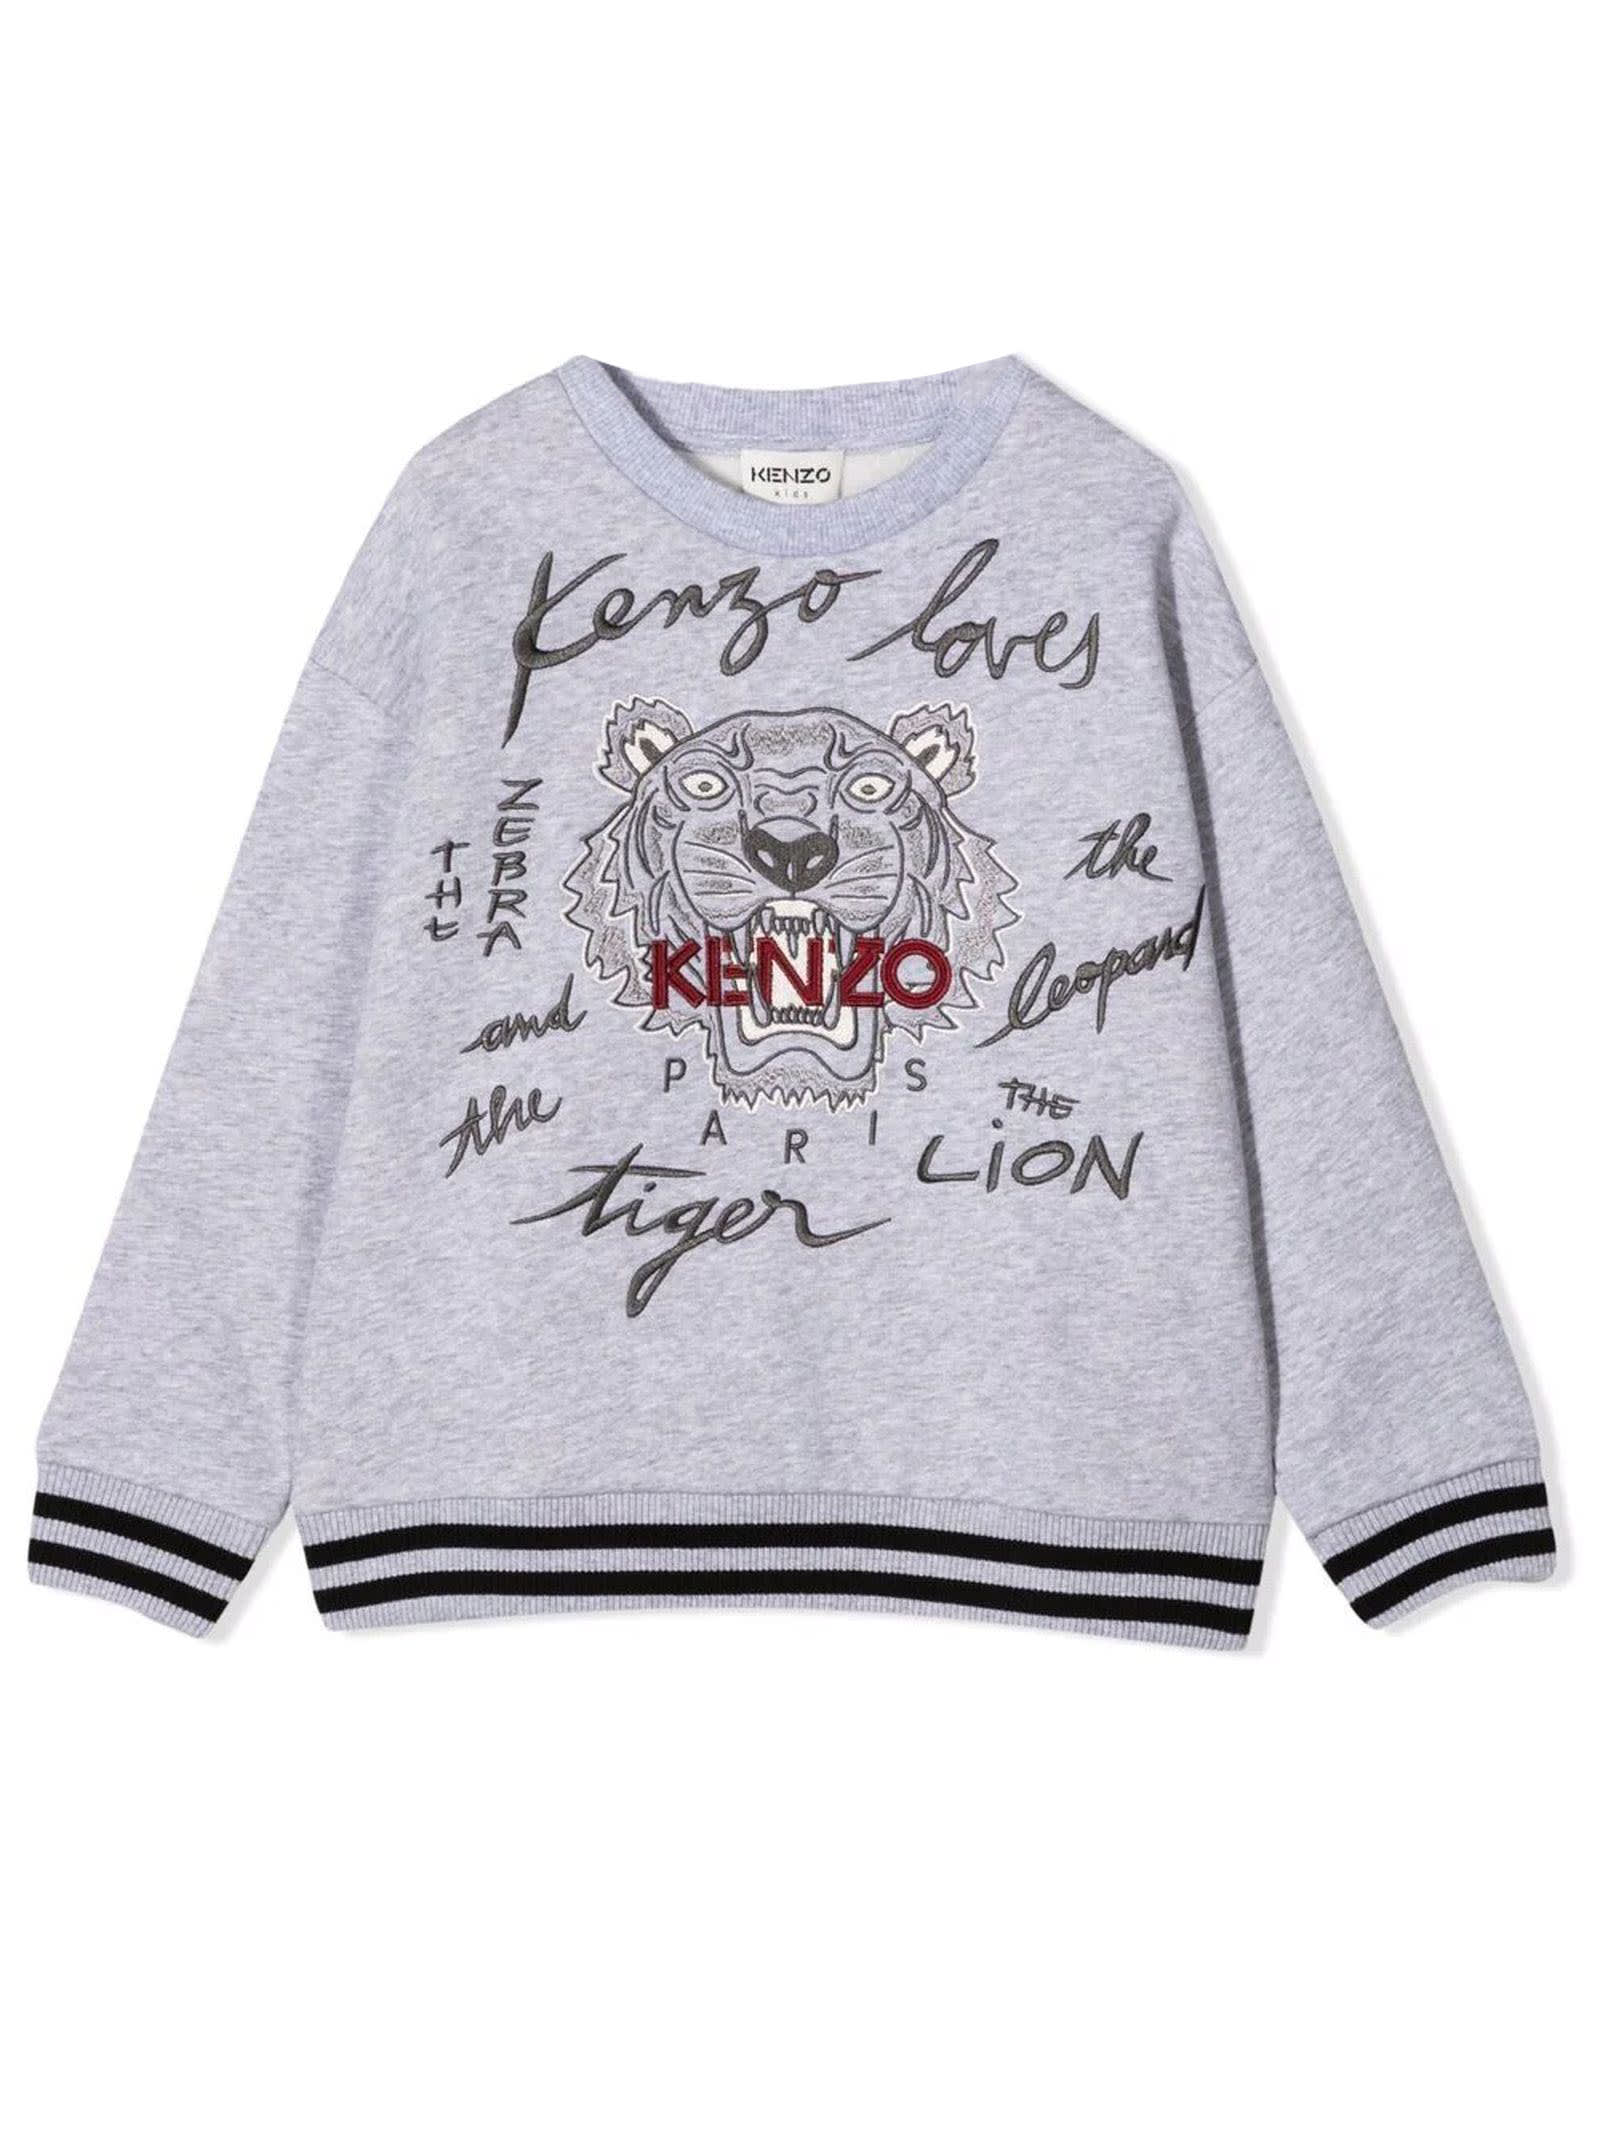 Kenzo Grey Cotton Blend Sweatshirt